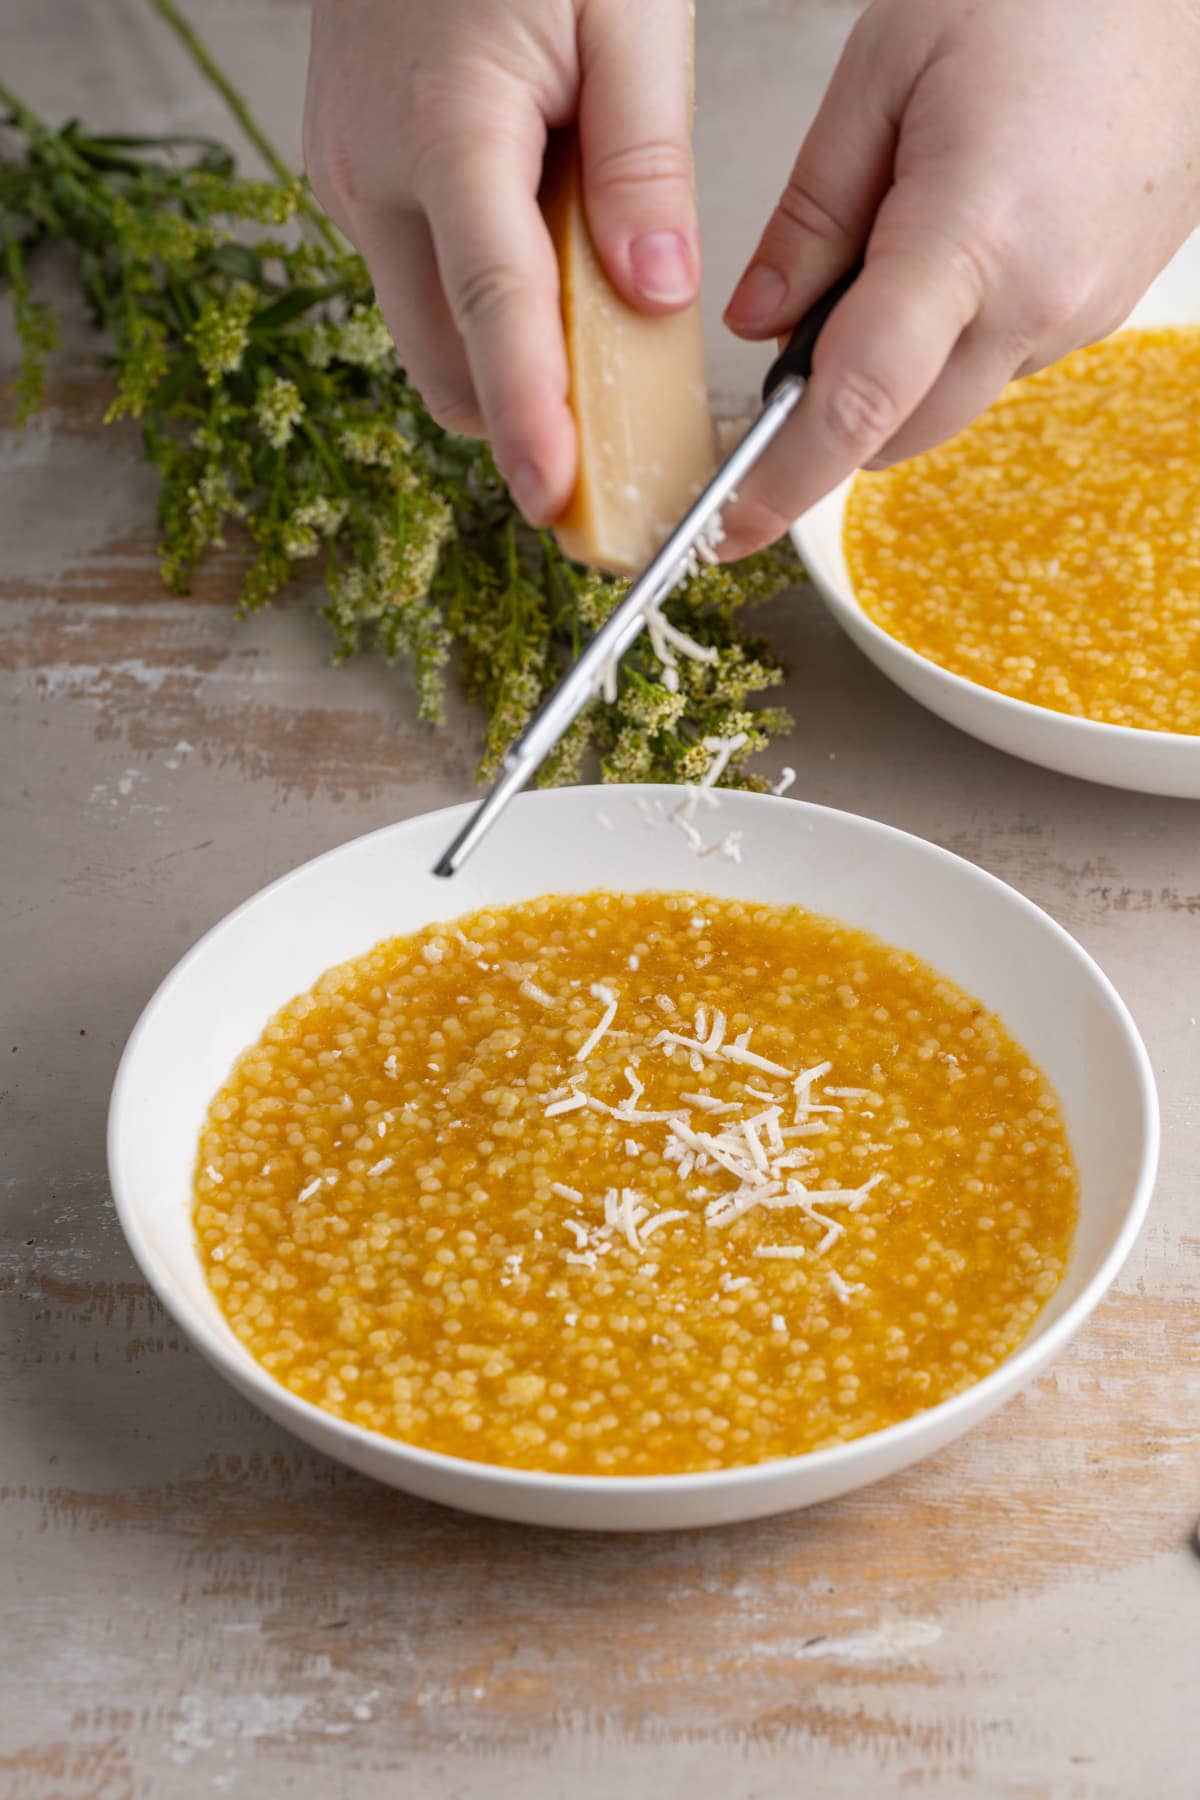 Grating Parmigiano reggiano over top vegetable pastina soup.